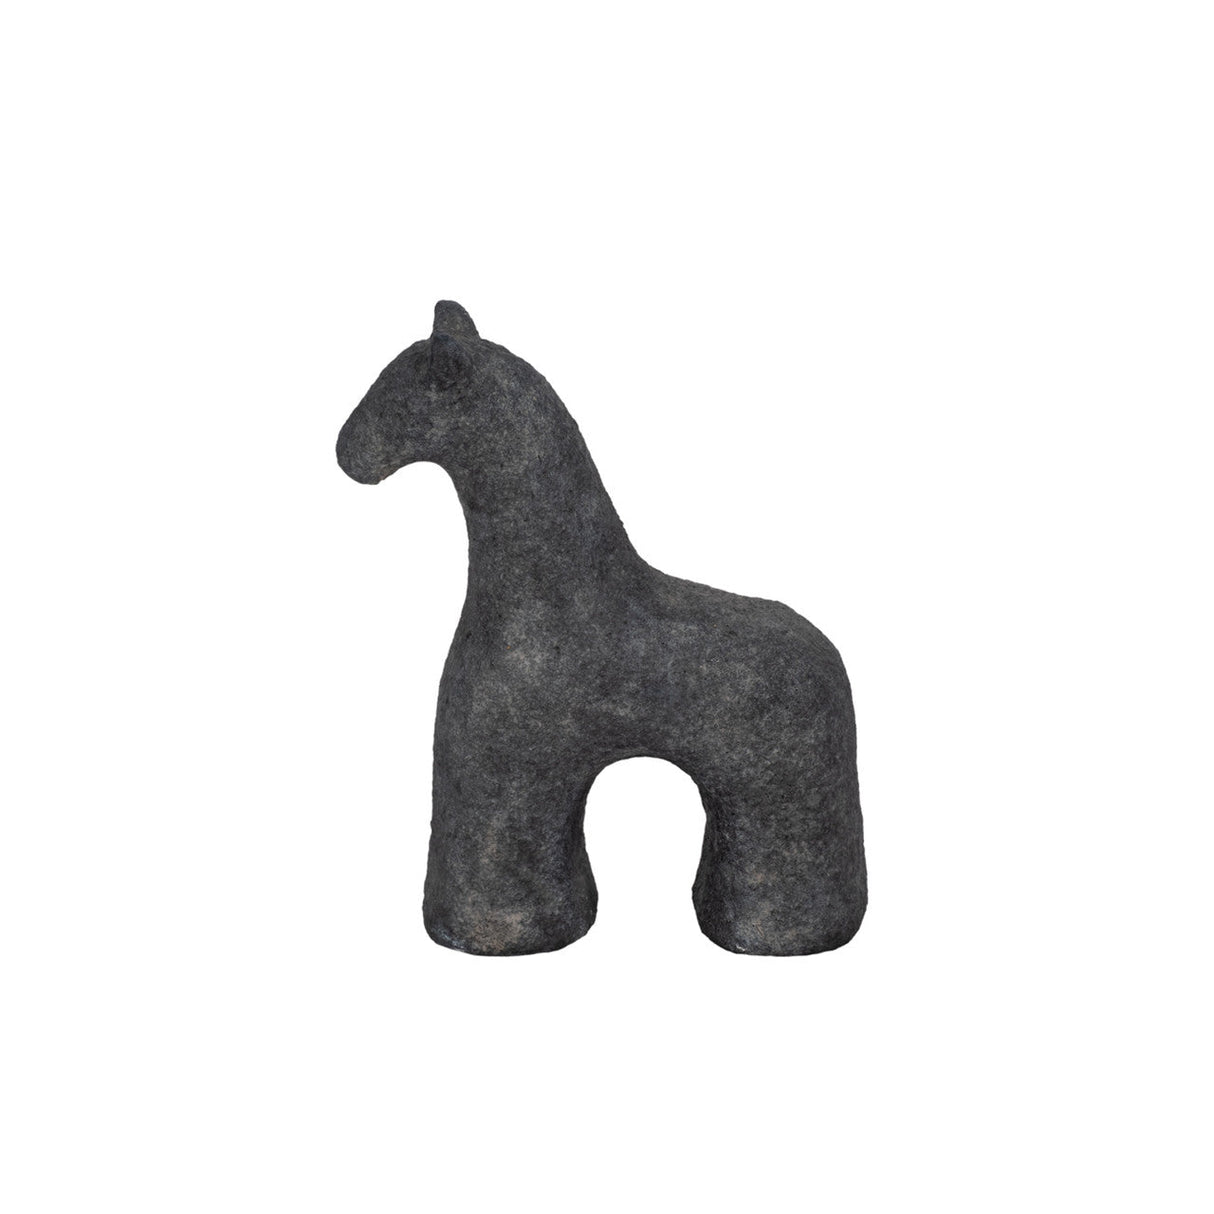 6" Textured Horse, Black